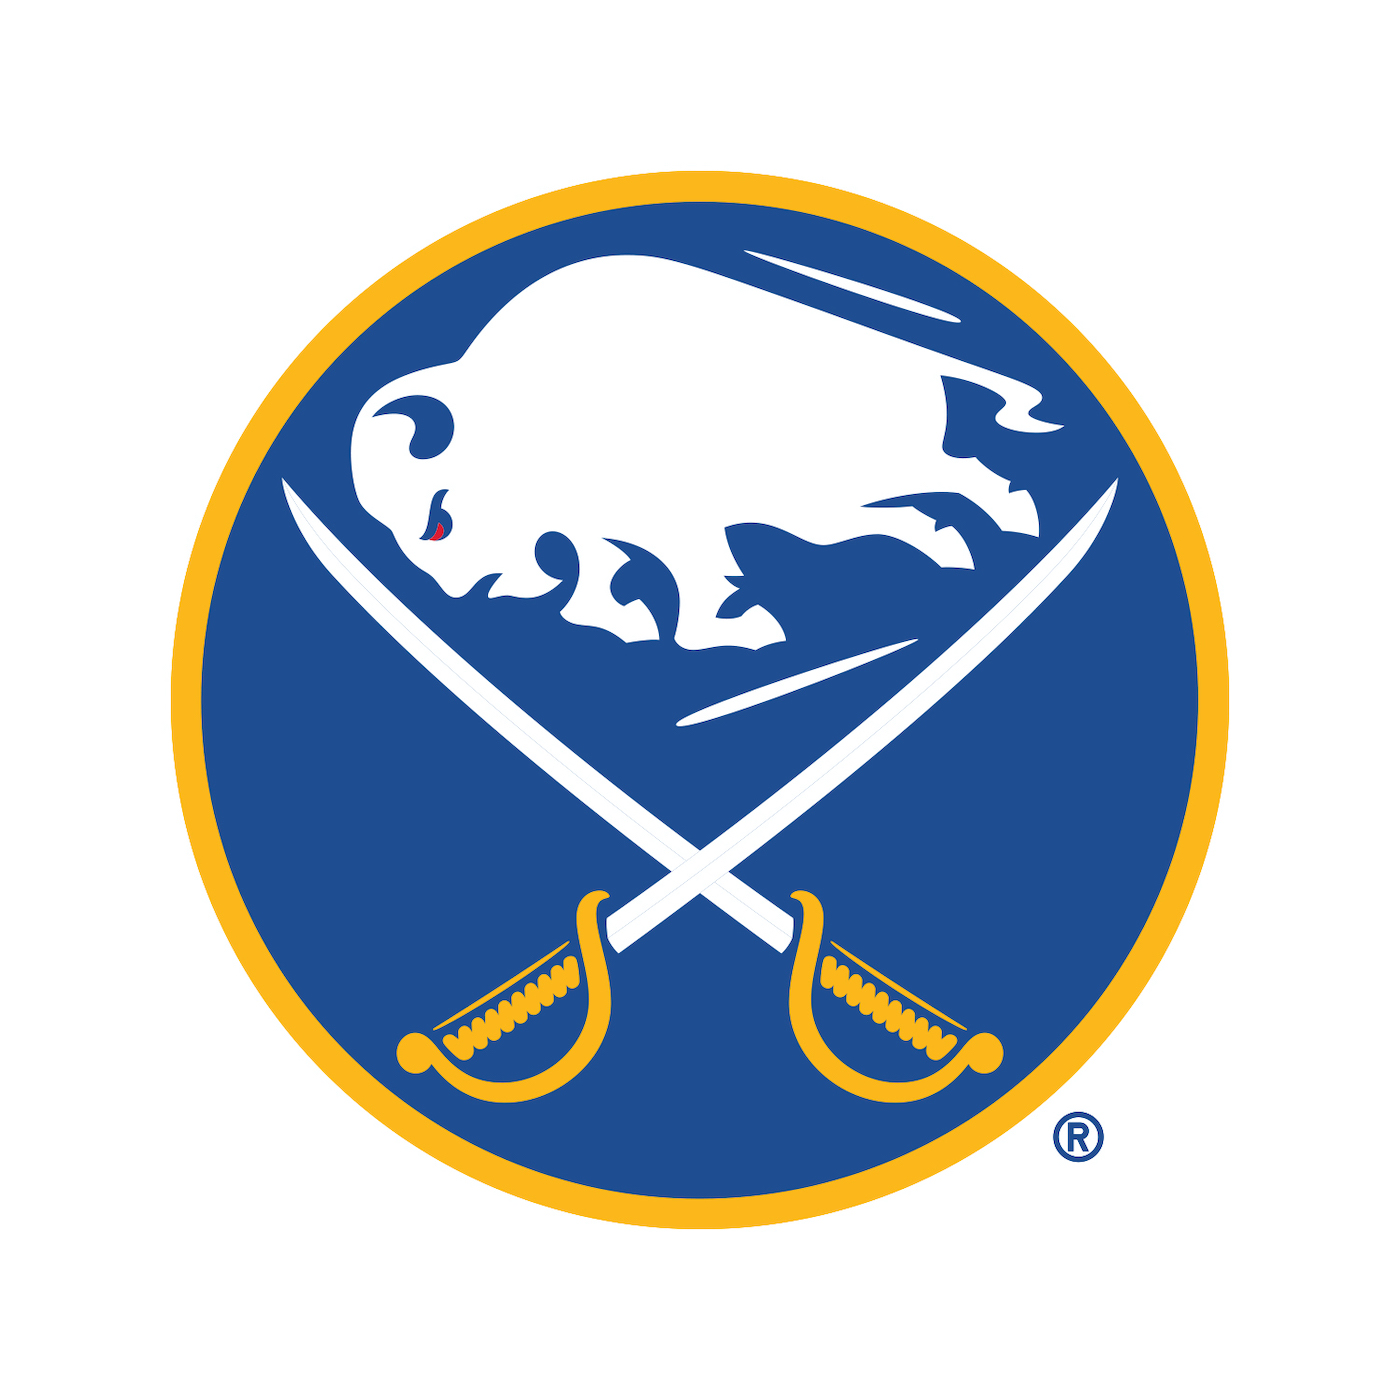 Buffalo Sabres logo courtesy of the Buffalo Sabres and Pegula Sports and Entertainment.